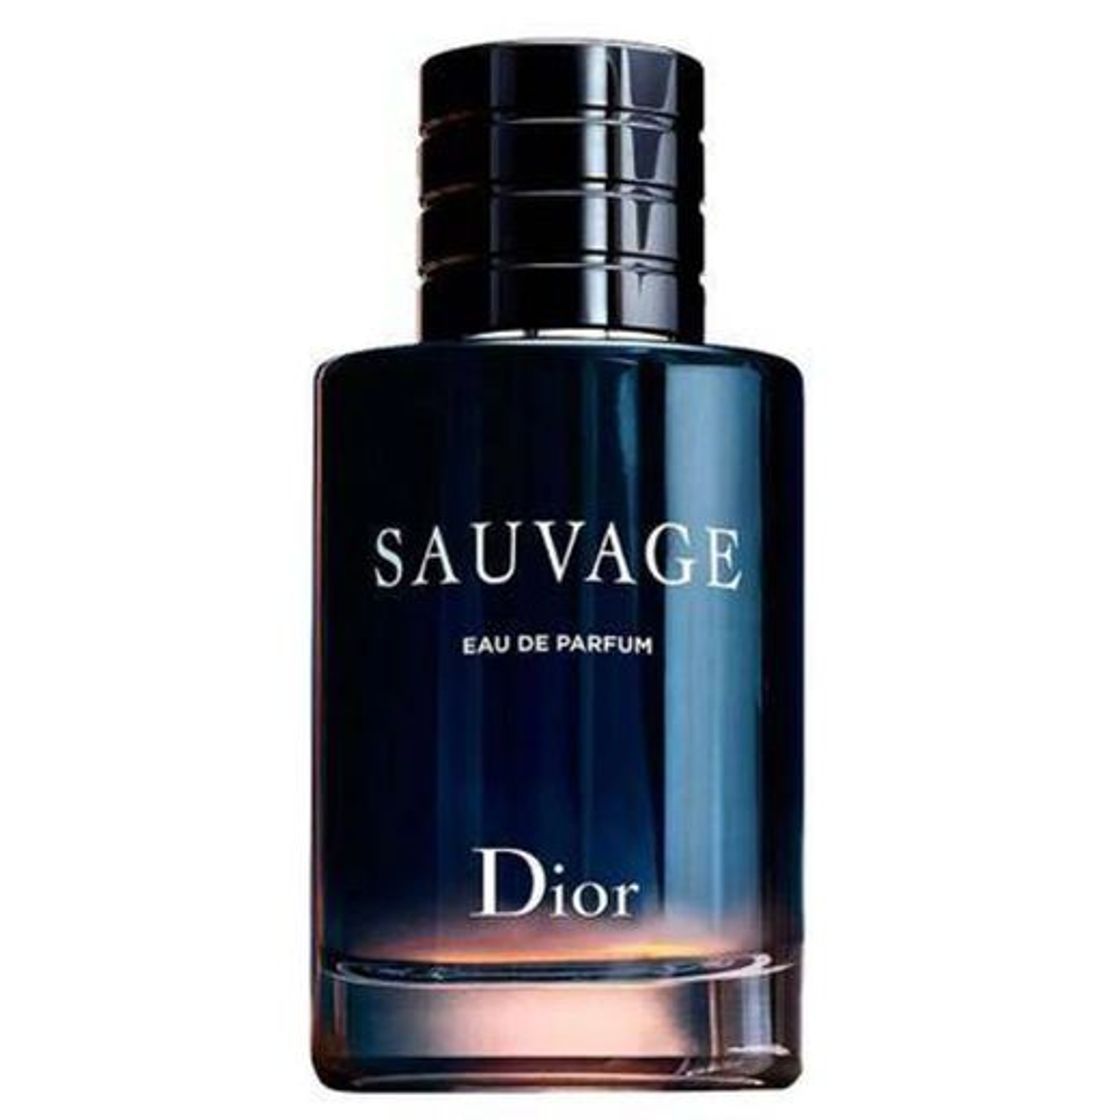 Sauvage Dior

